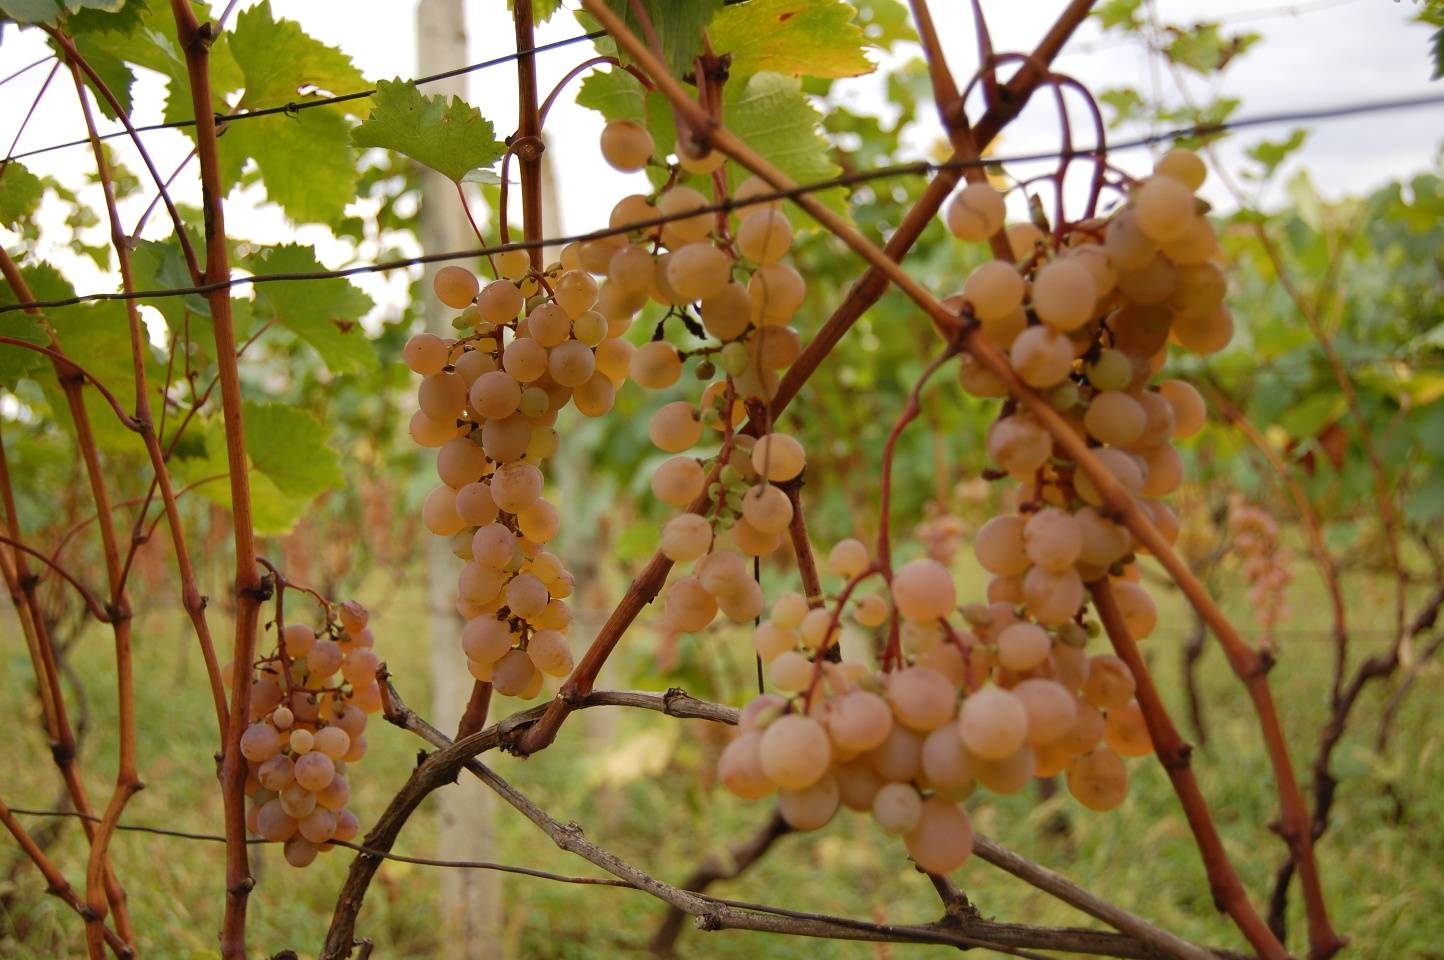 Сорт винограда полонез 50 фото и описание